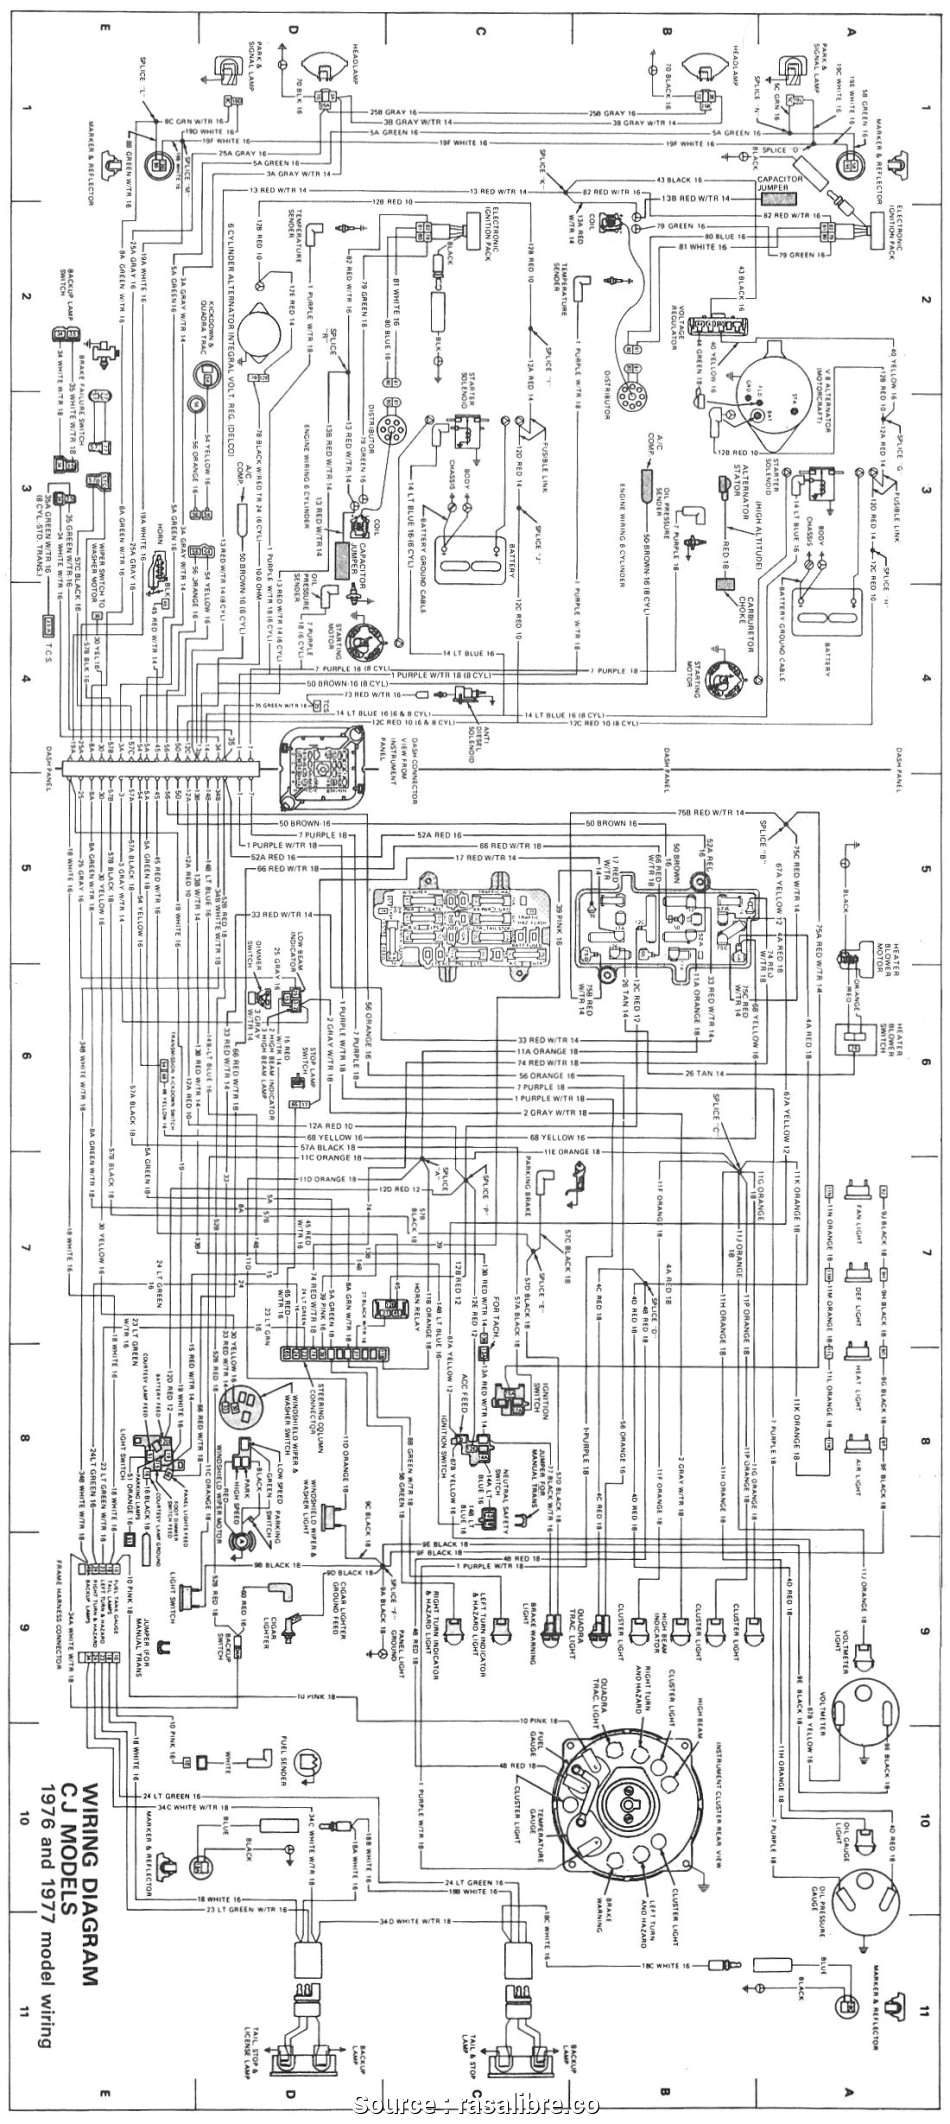 1979 jeep wrangler wiring diagram home wiring diagram wiring diagram 1979 jeep cj7